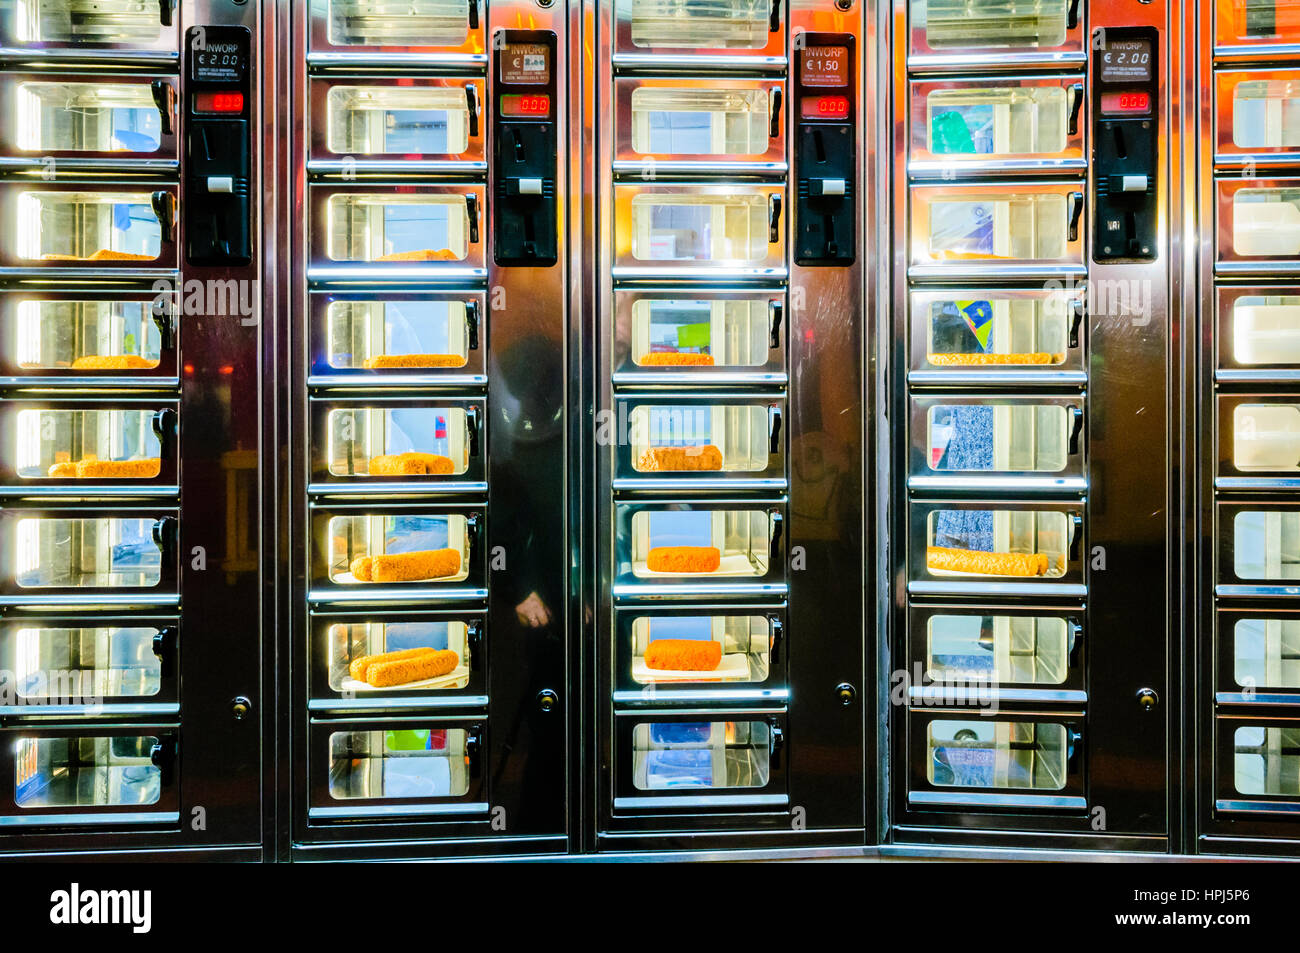 Autogeldmat vending machine in Netherlands - popular for dispensing hot food snacks Stock Photo